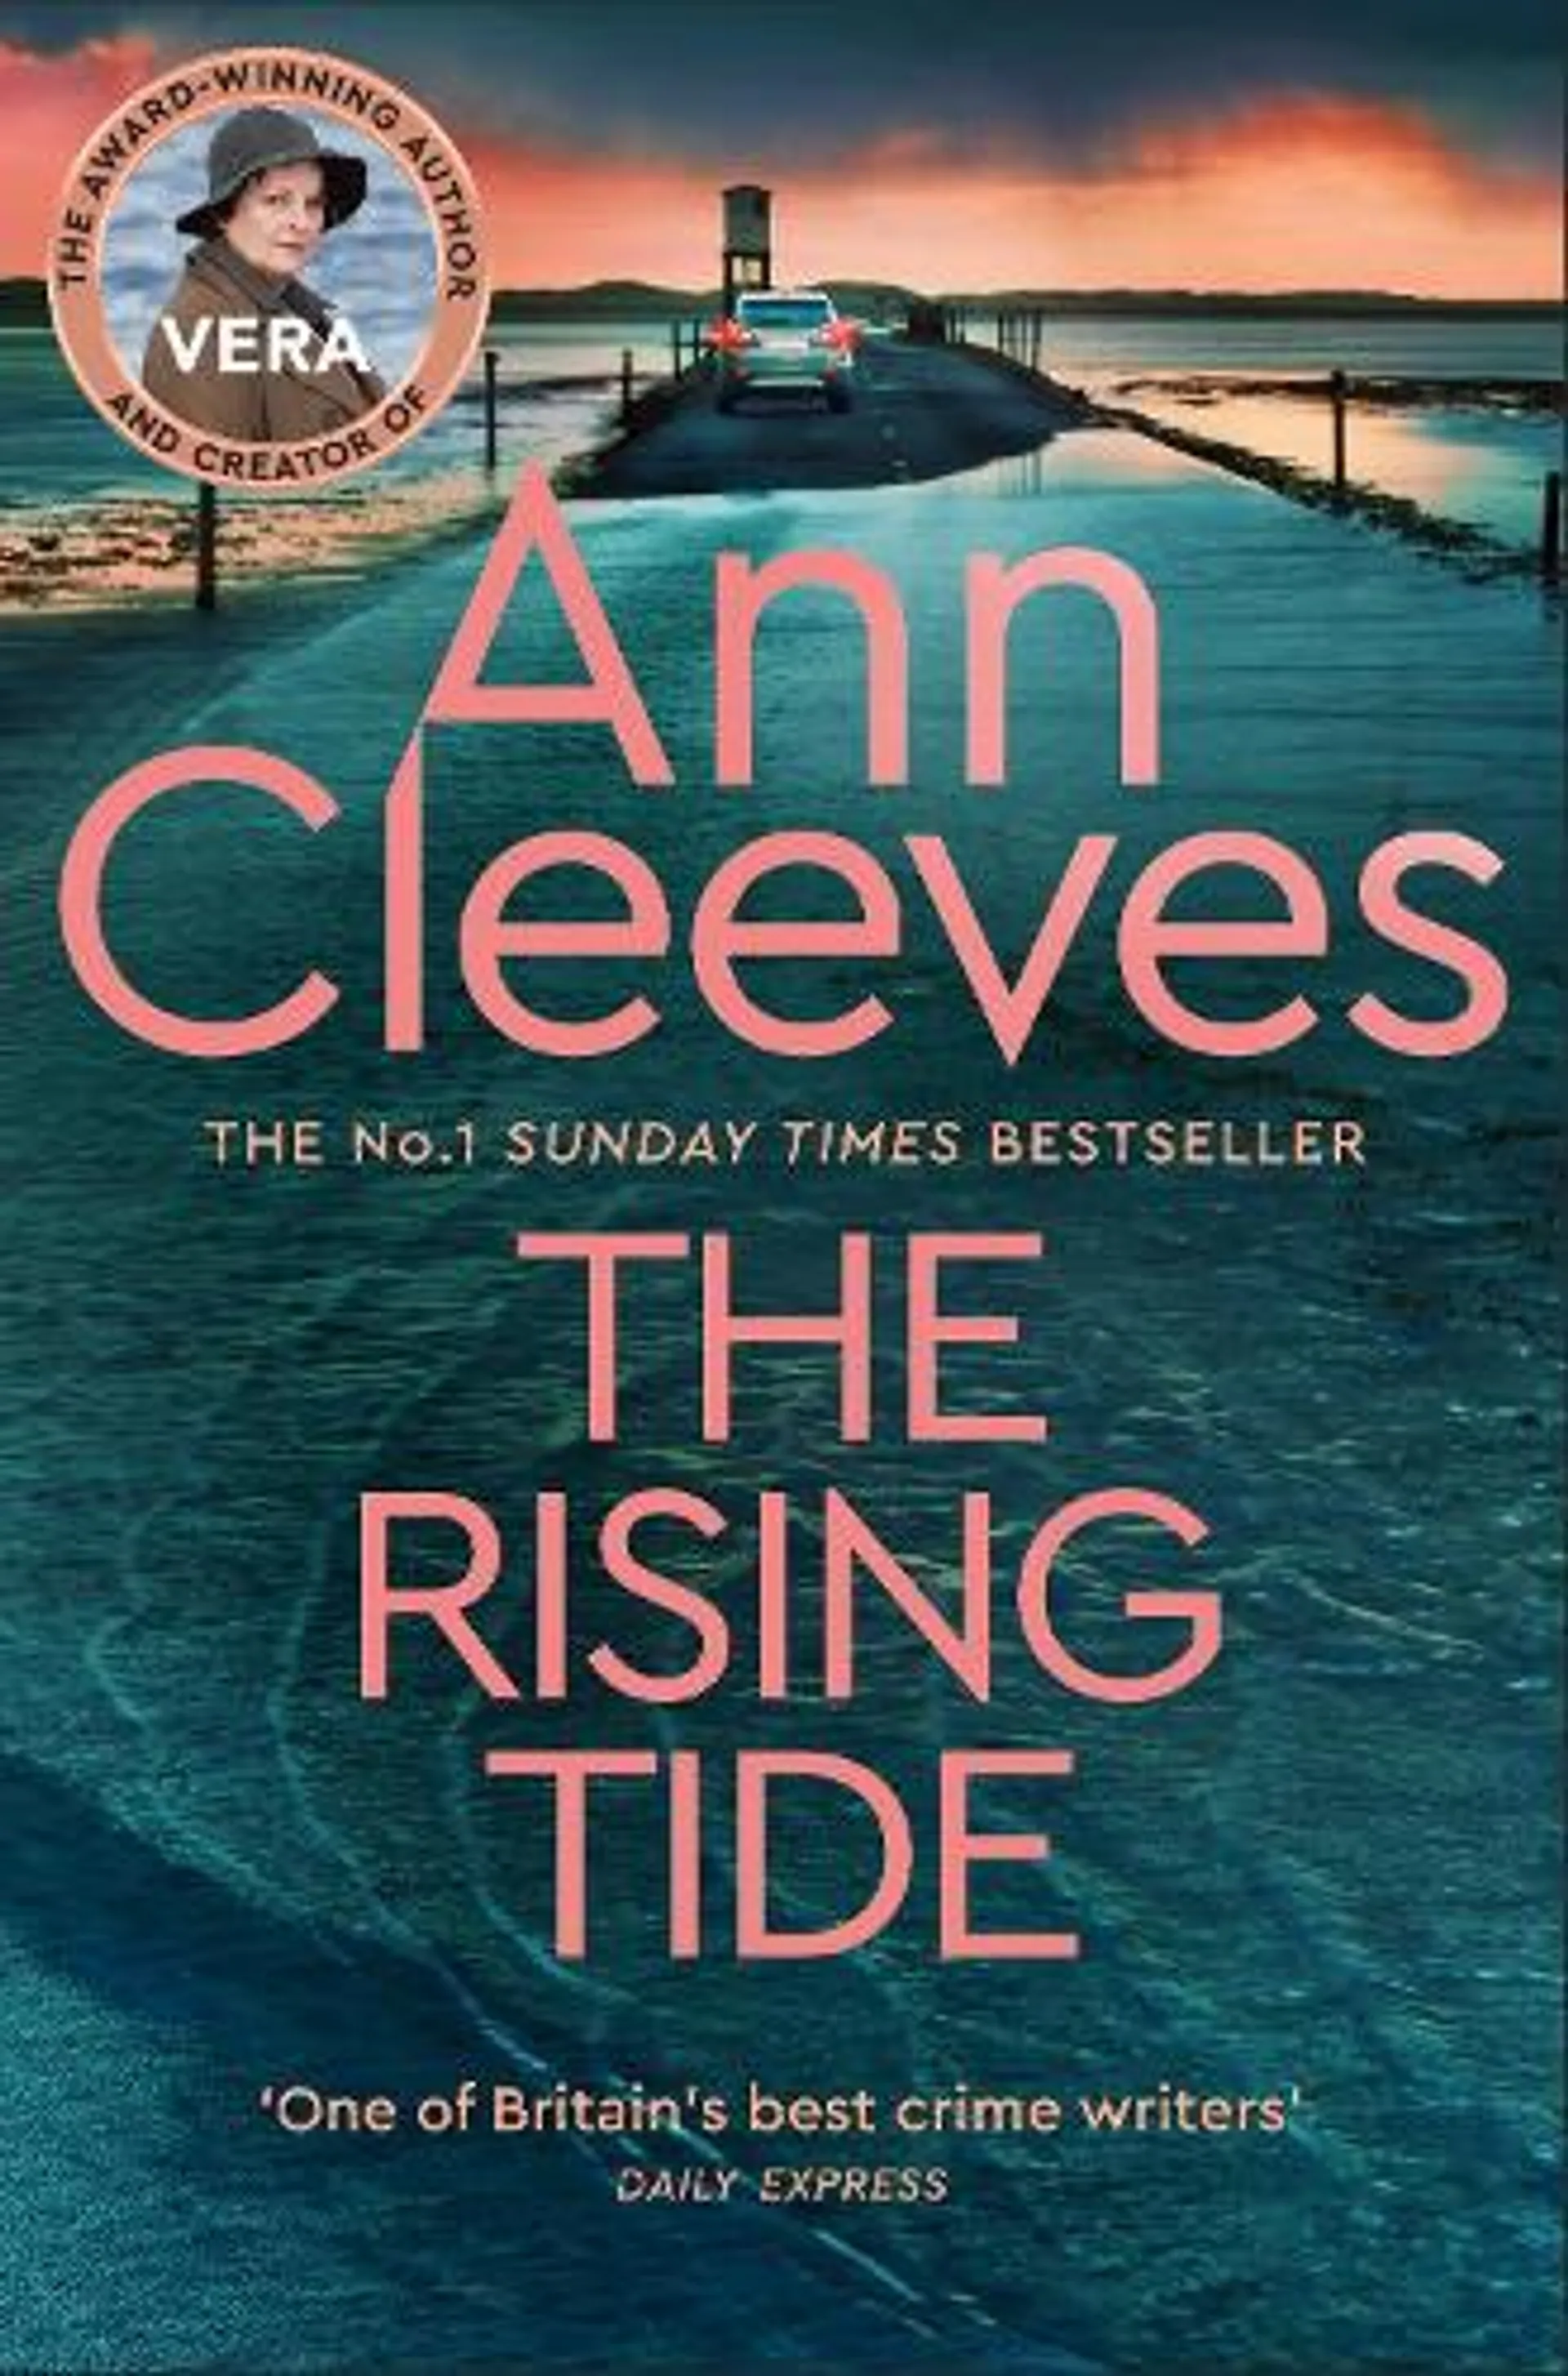 The Rising Tide - Vera Stanhope (Paperback)